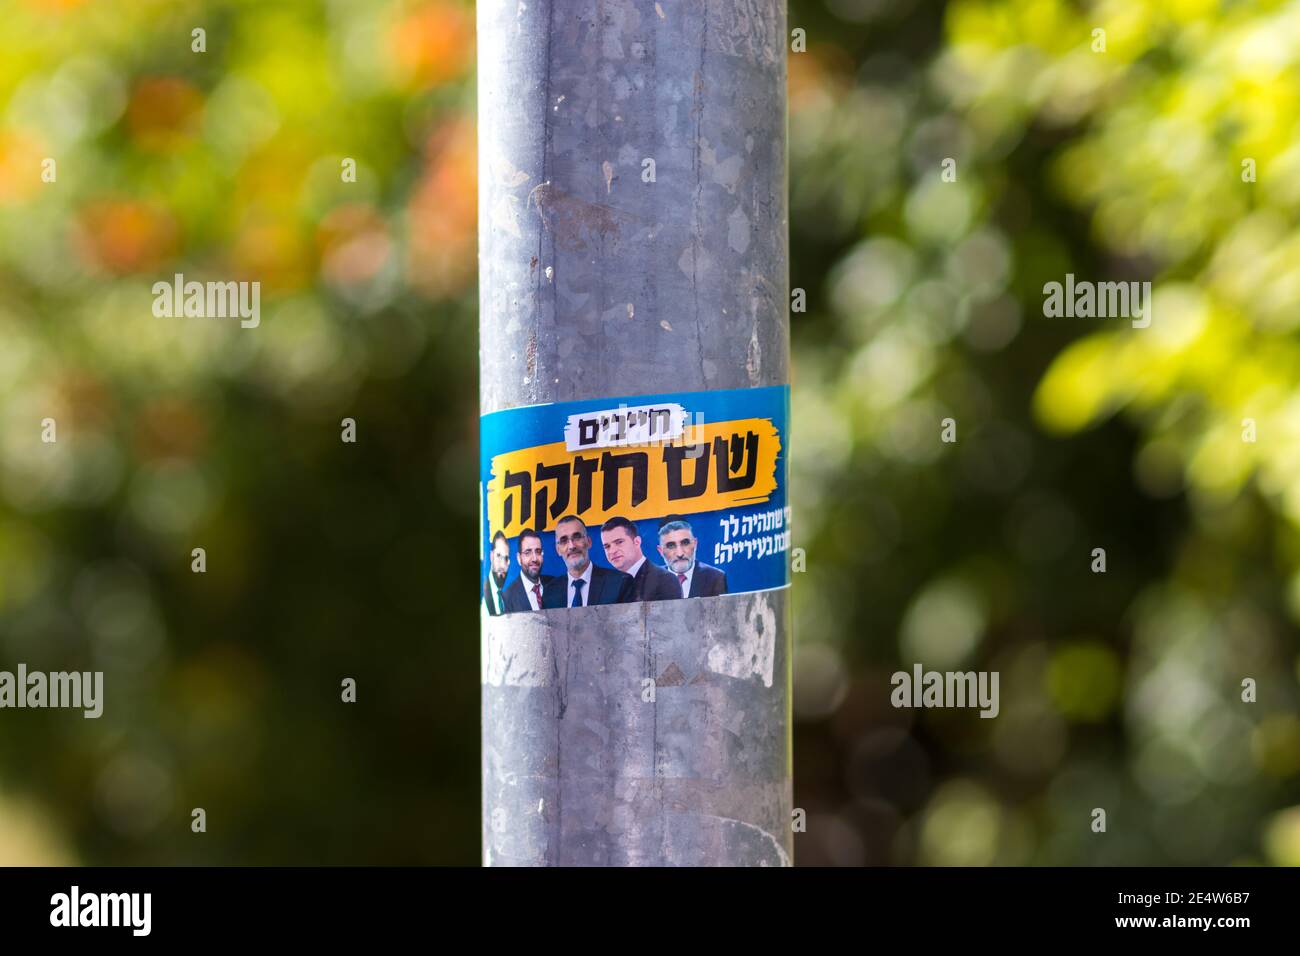 30-10-2018. jerusalem-israel. Election slogan on a Metal pillar, blurred background of trees Stock Photo